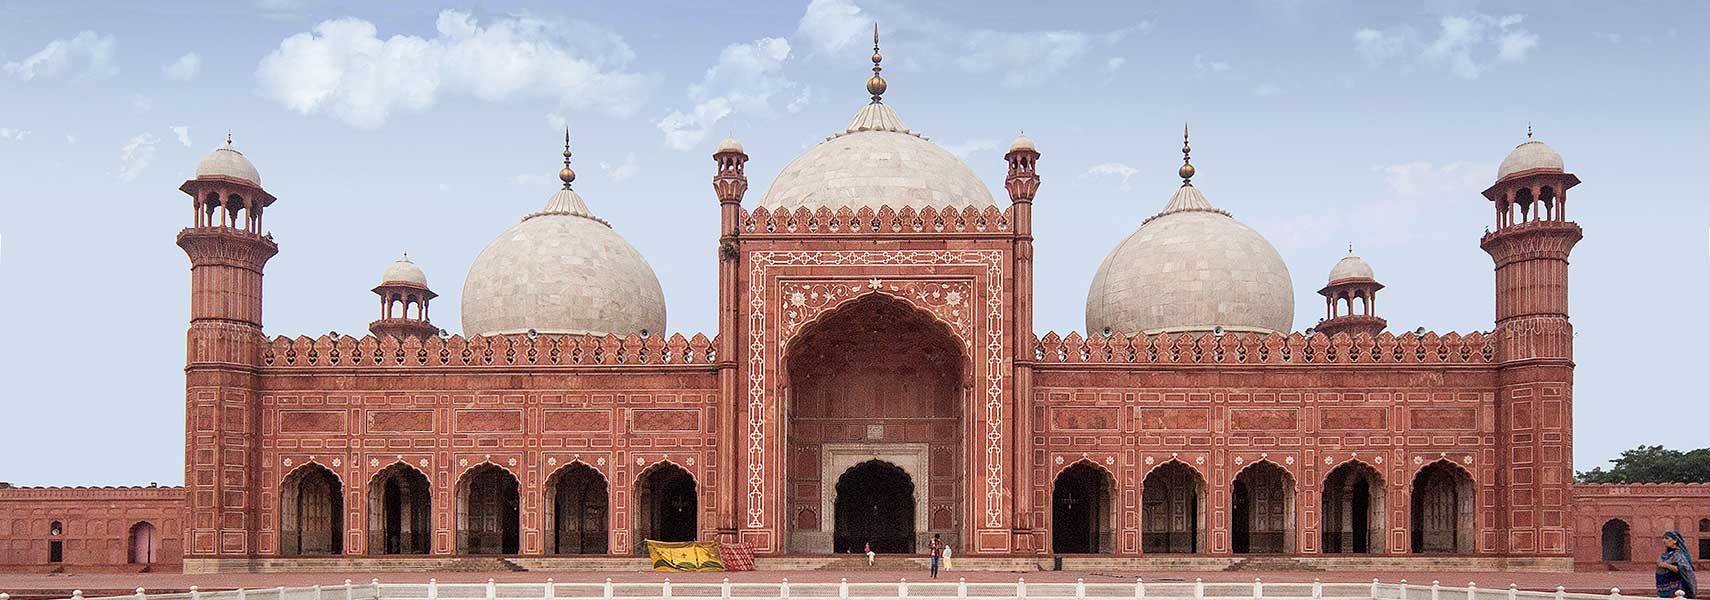 Badshahi Masjid Mosque, Lahore